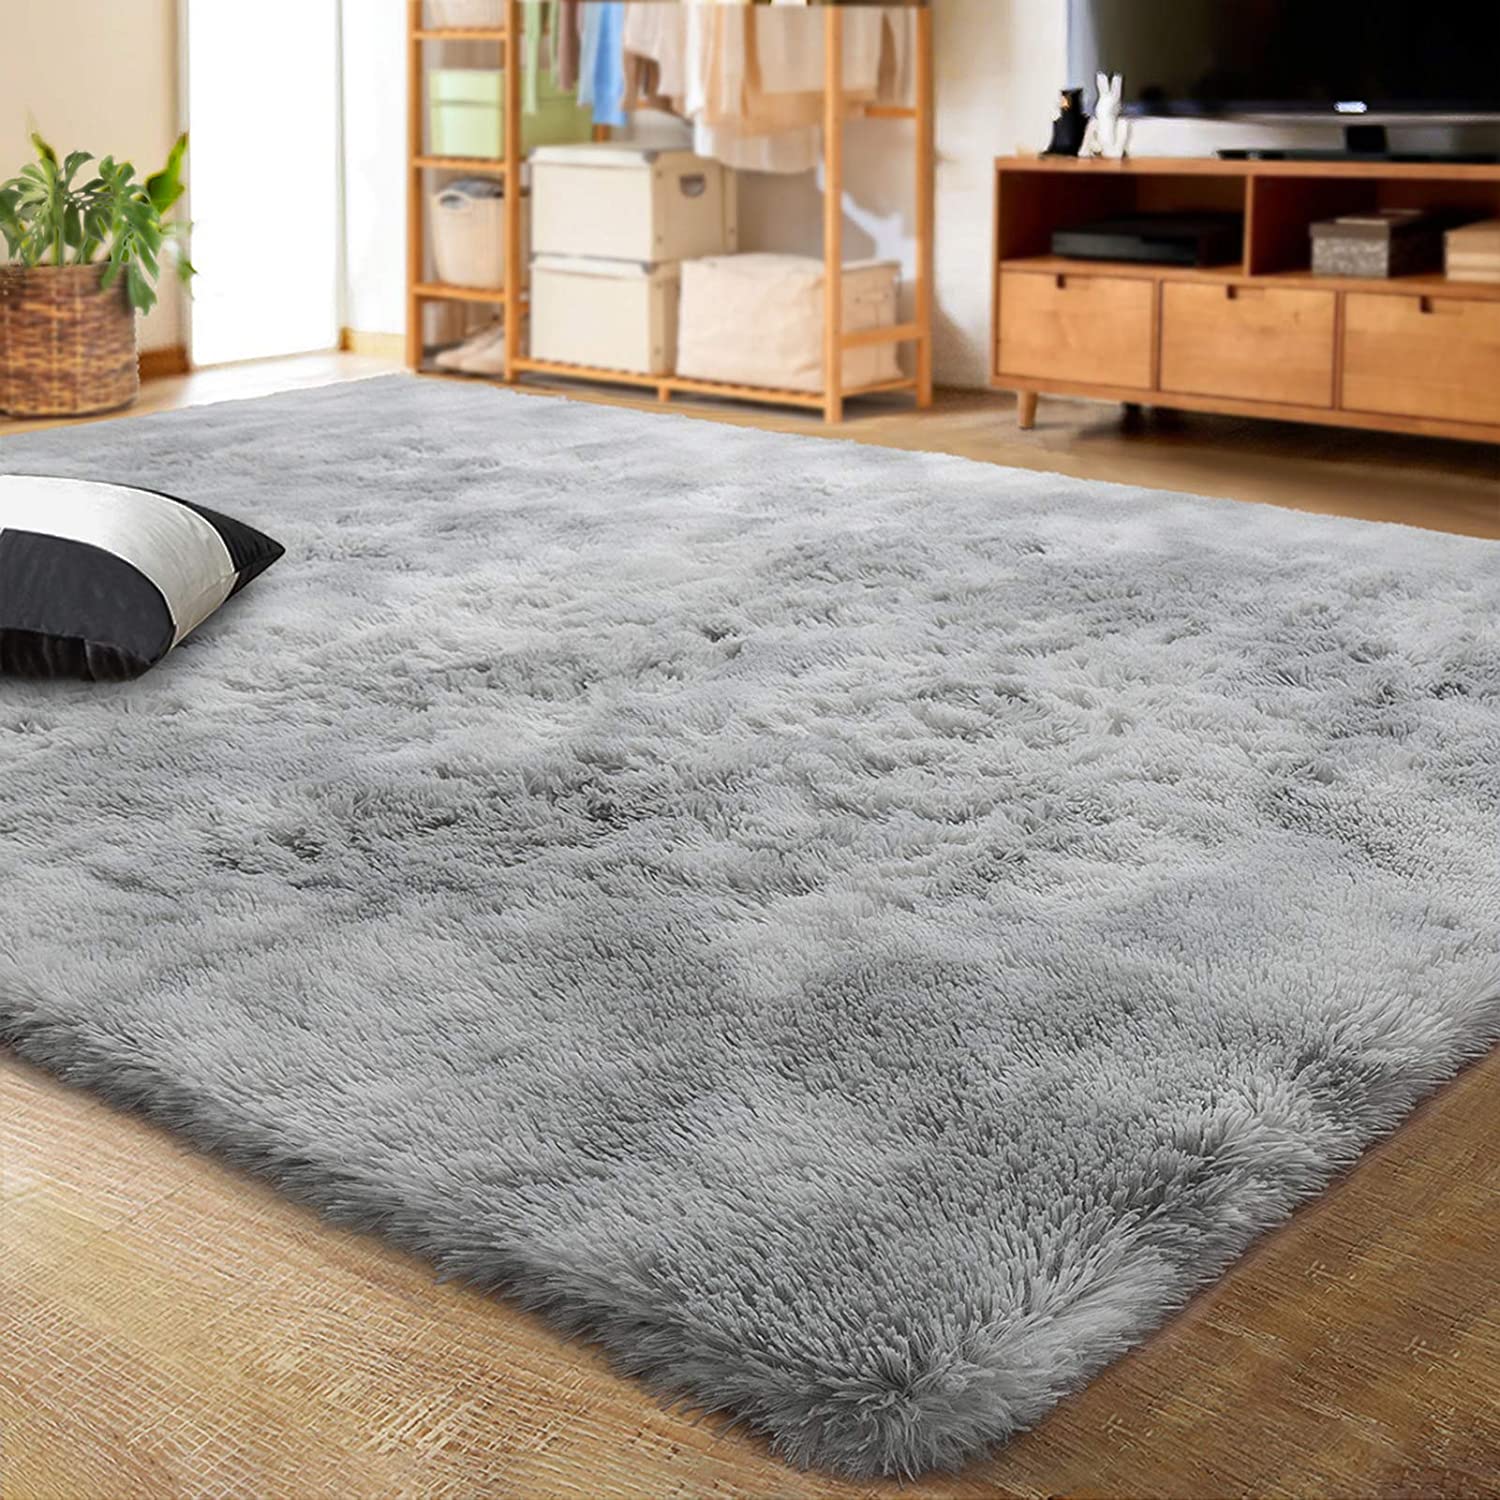 Silken 32 oz 3/4" Thick Soft Indoor Frieze Shag Carpet Area Rug 